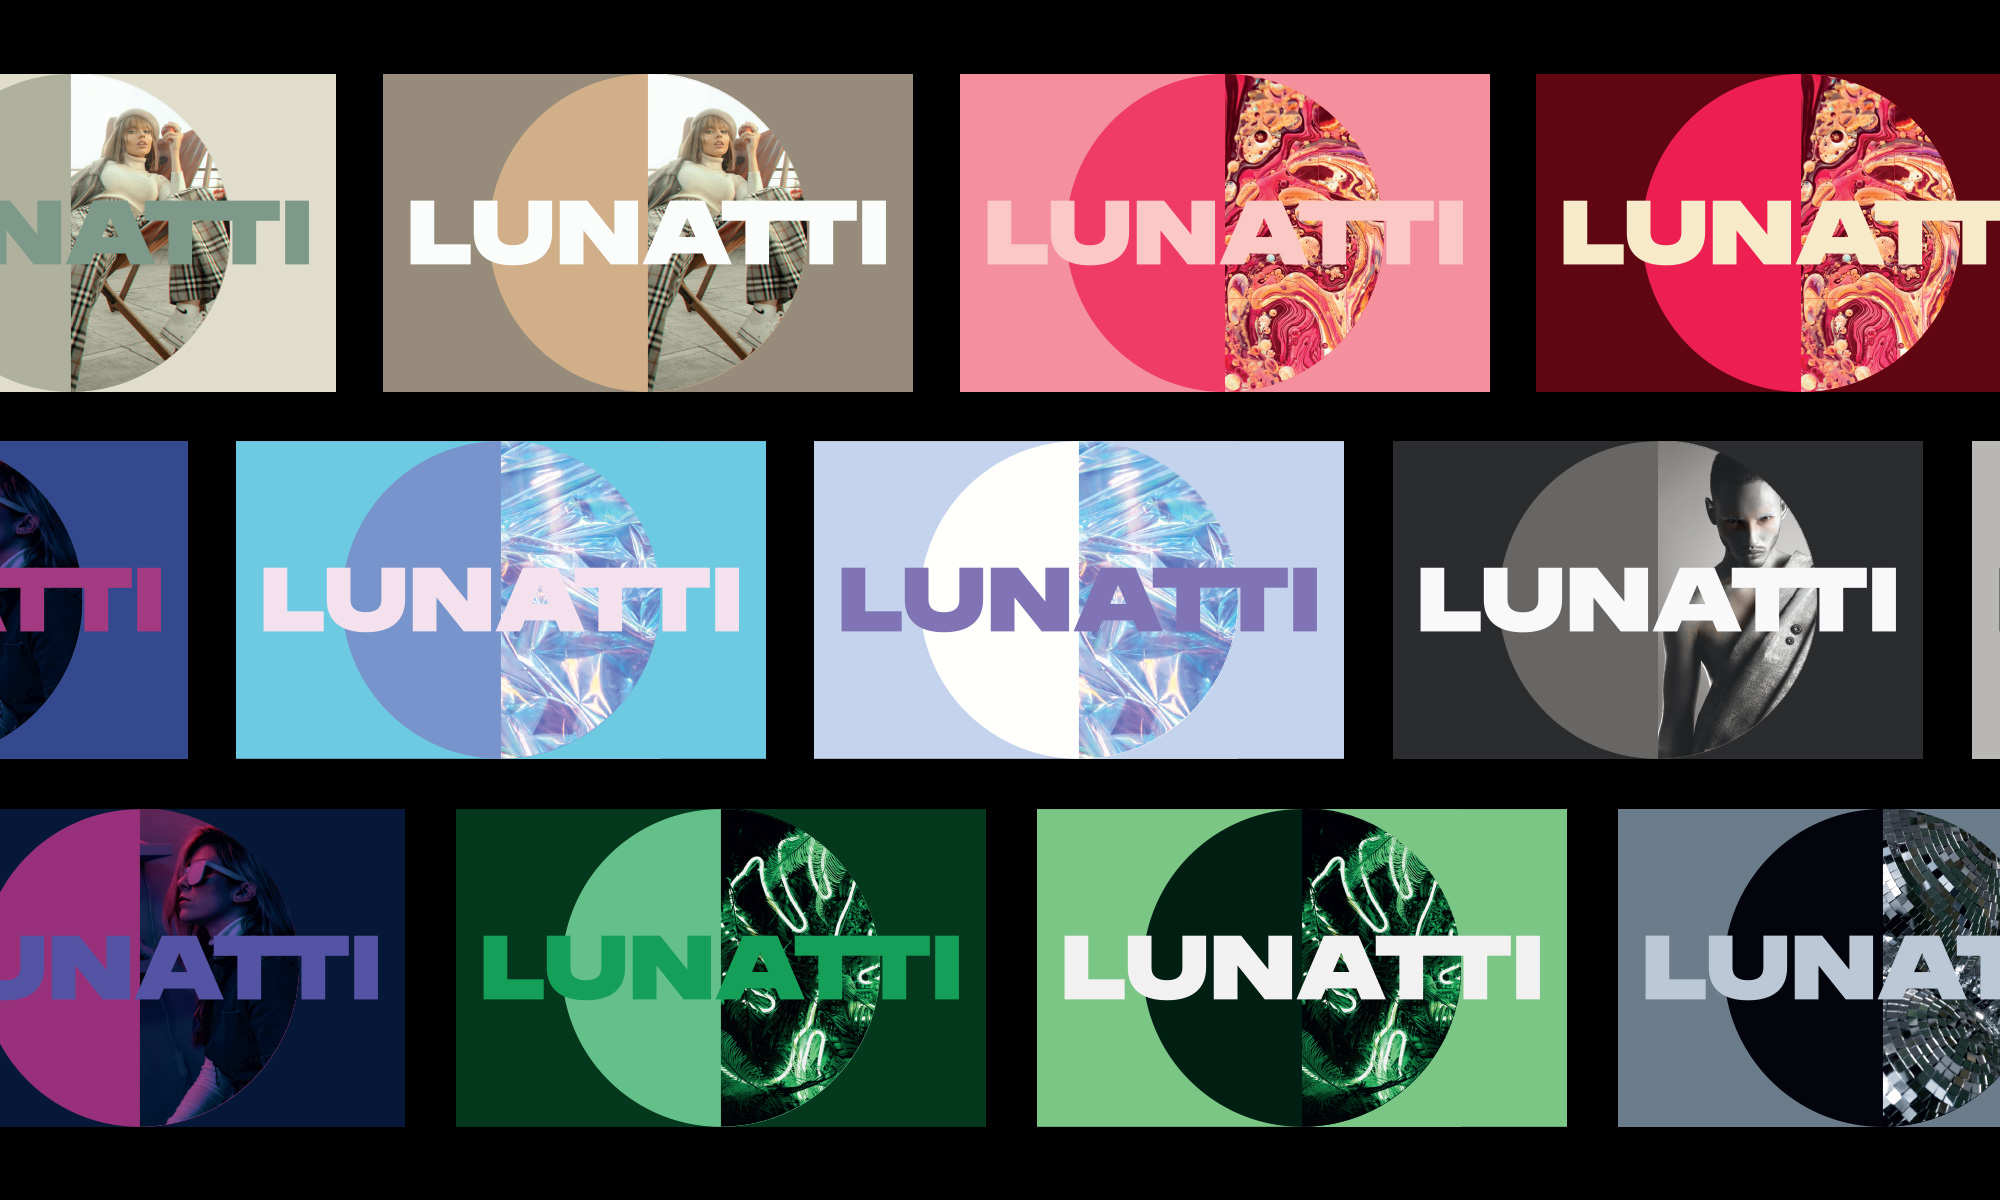 Lunatti collage